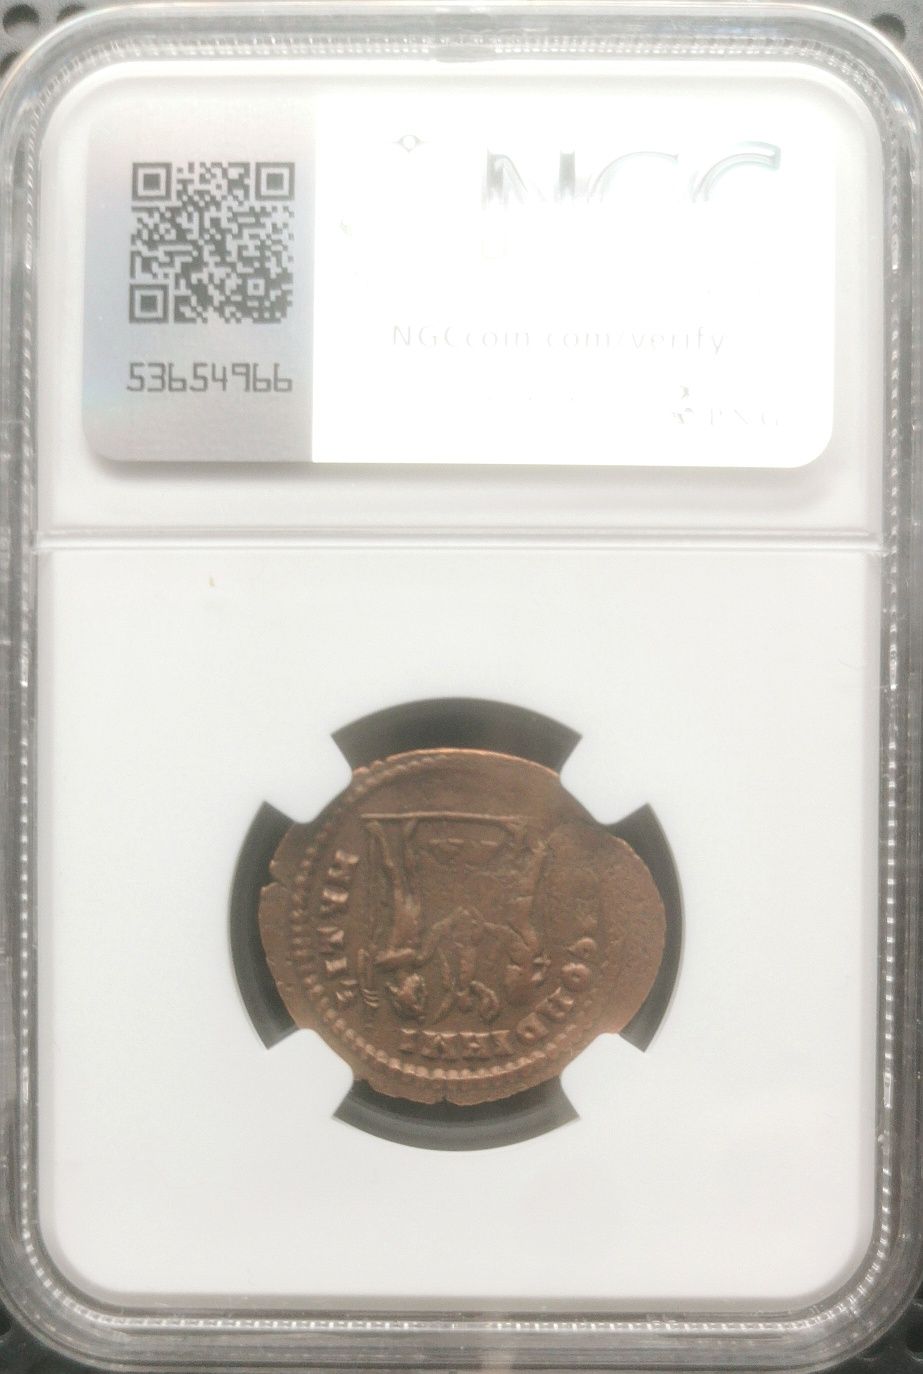 Oryginalna moneta rzymska Cesarz Galeriusz - grading NGC